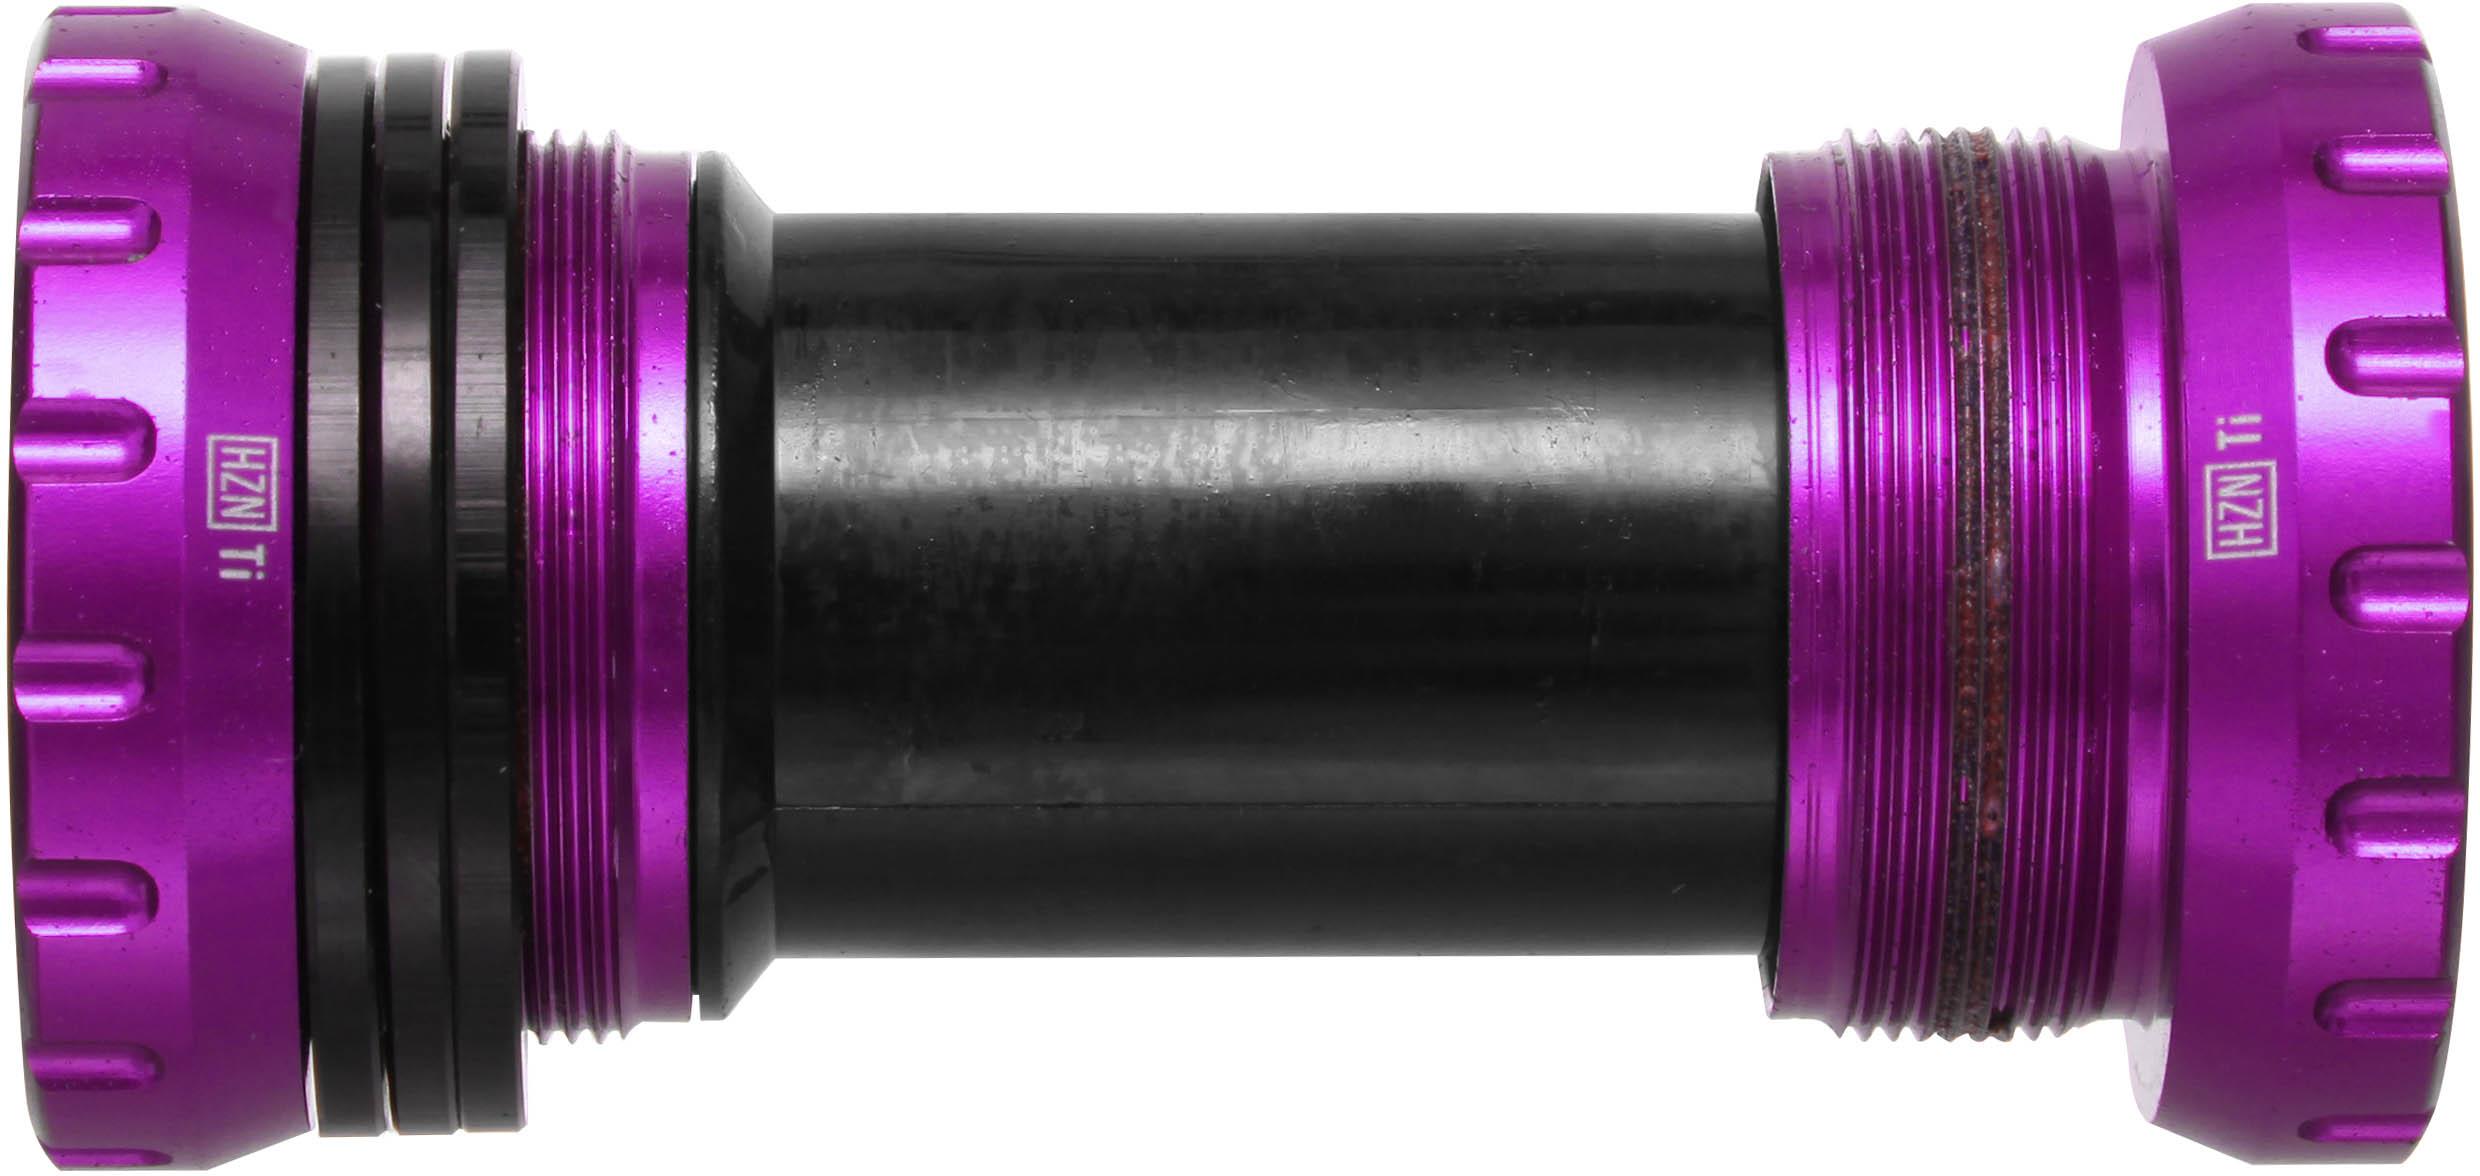 Nukeproof Horizon Shimano Bottom Bracket (24mm) - Purple